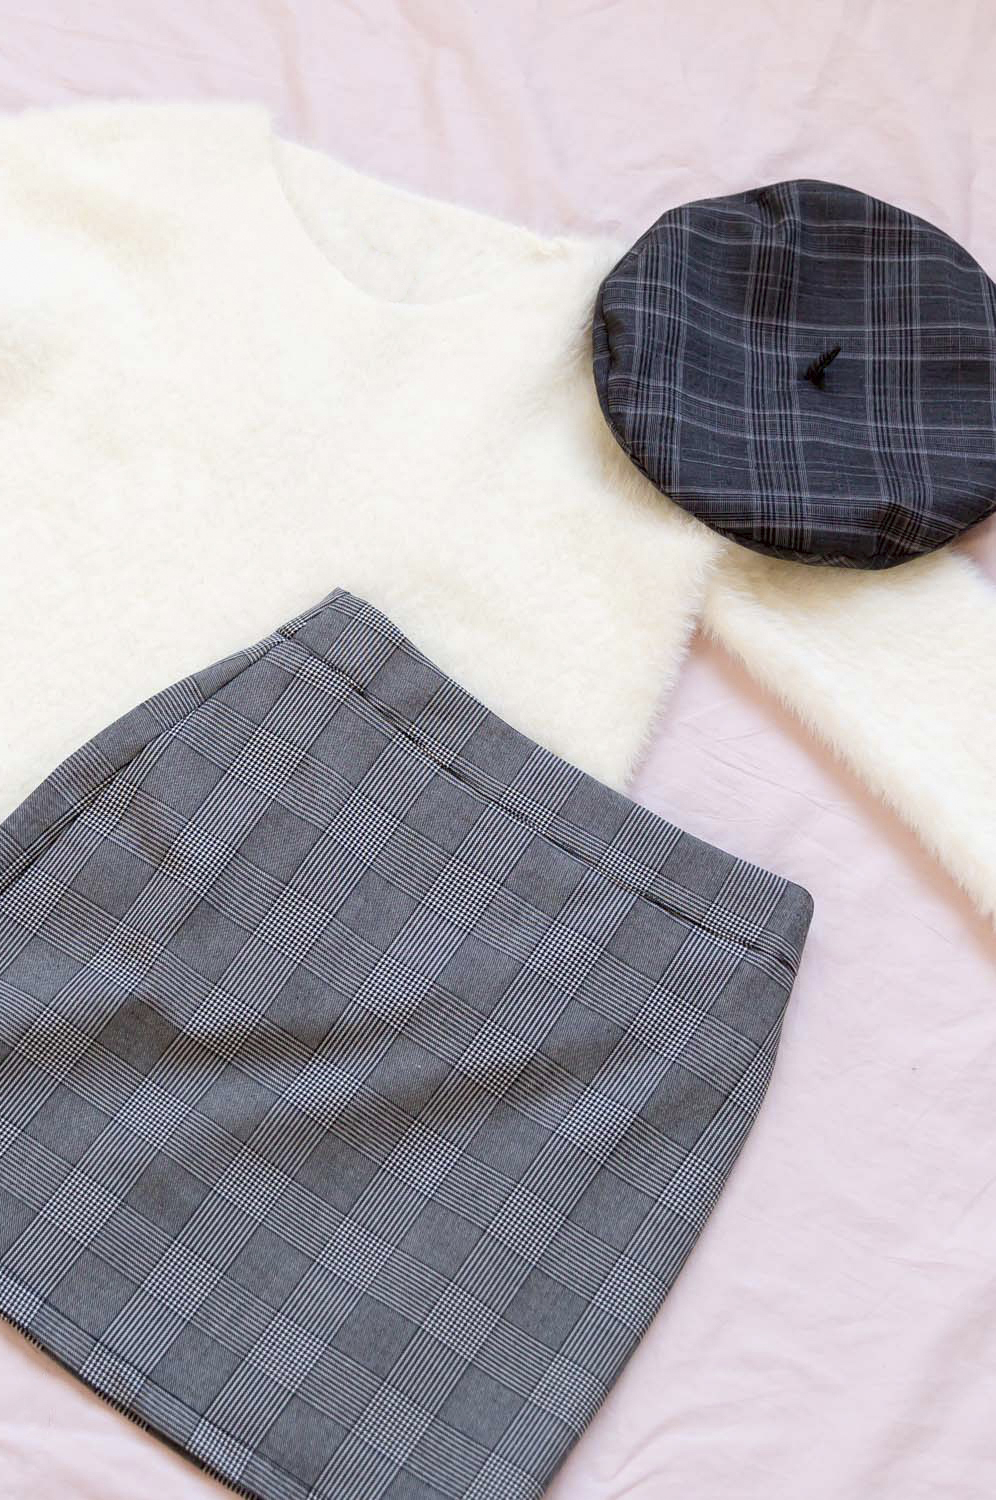 Meyana skirt - grey check, poppy fluffy sweater - white, mutha sneakers - white, audrey beret - grey plaid,  4.jpg